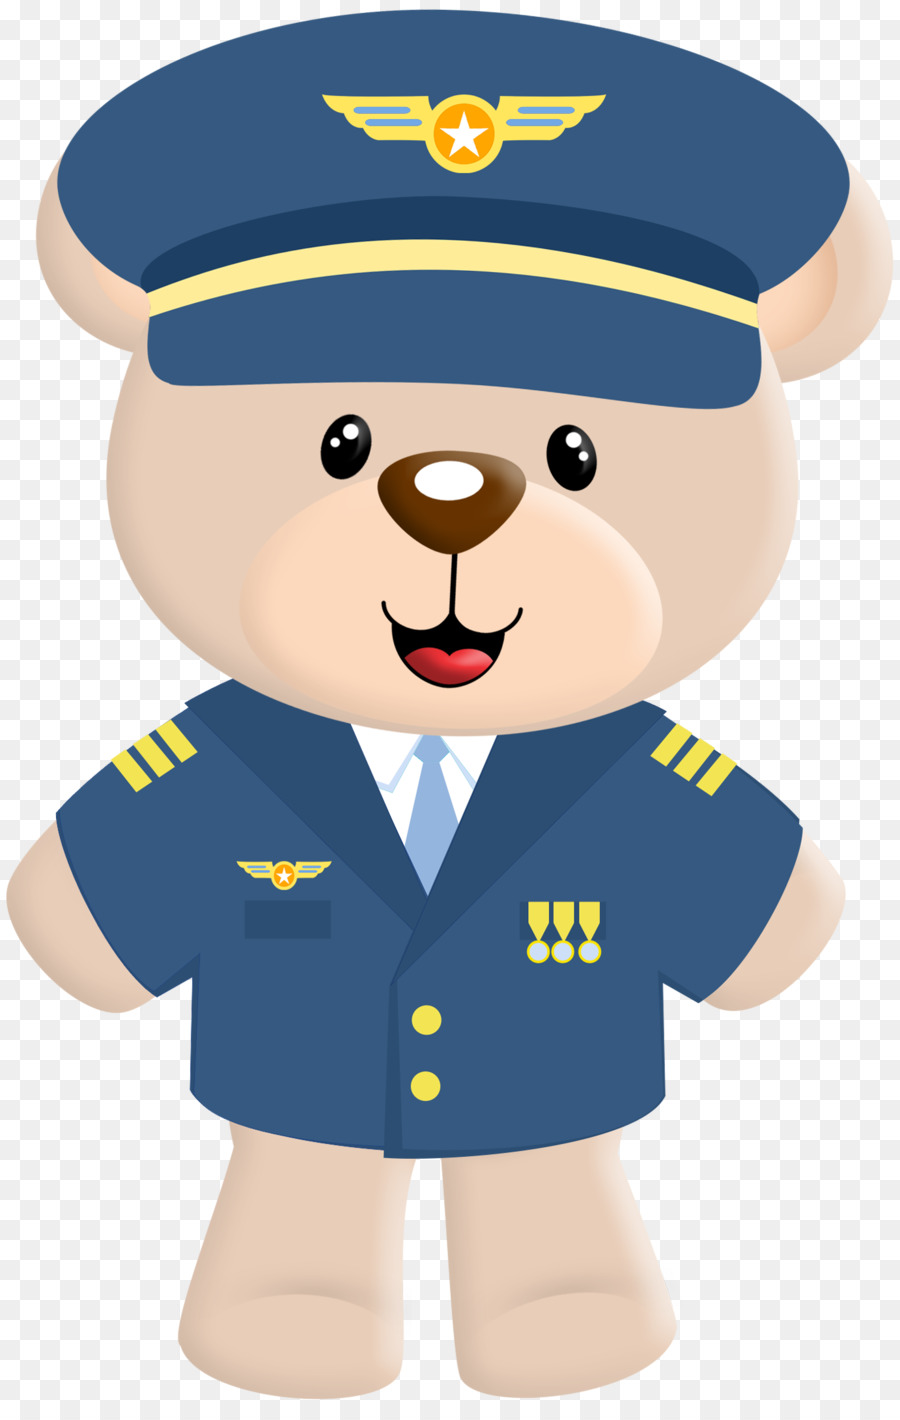 Bear Portable Network Graphics Clip art Vẽ hình - Gấu